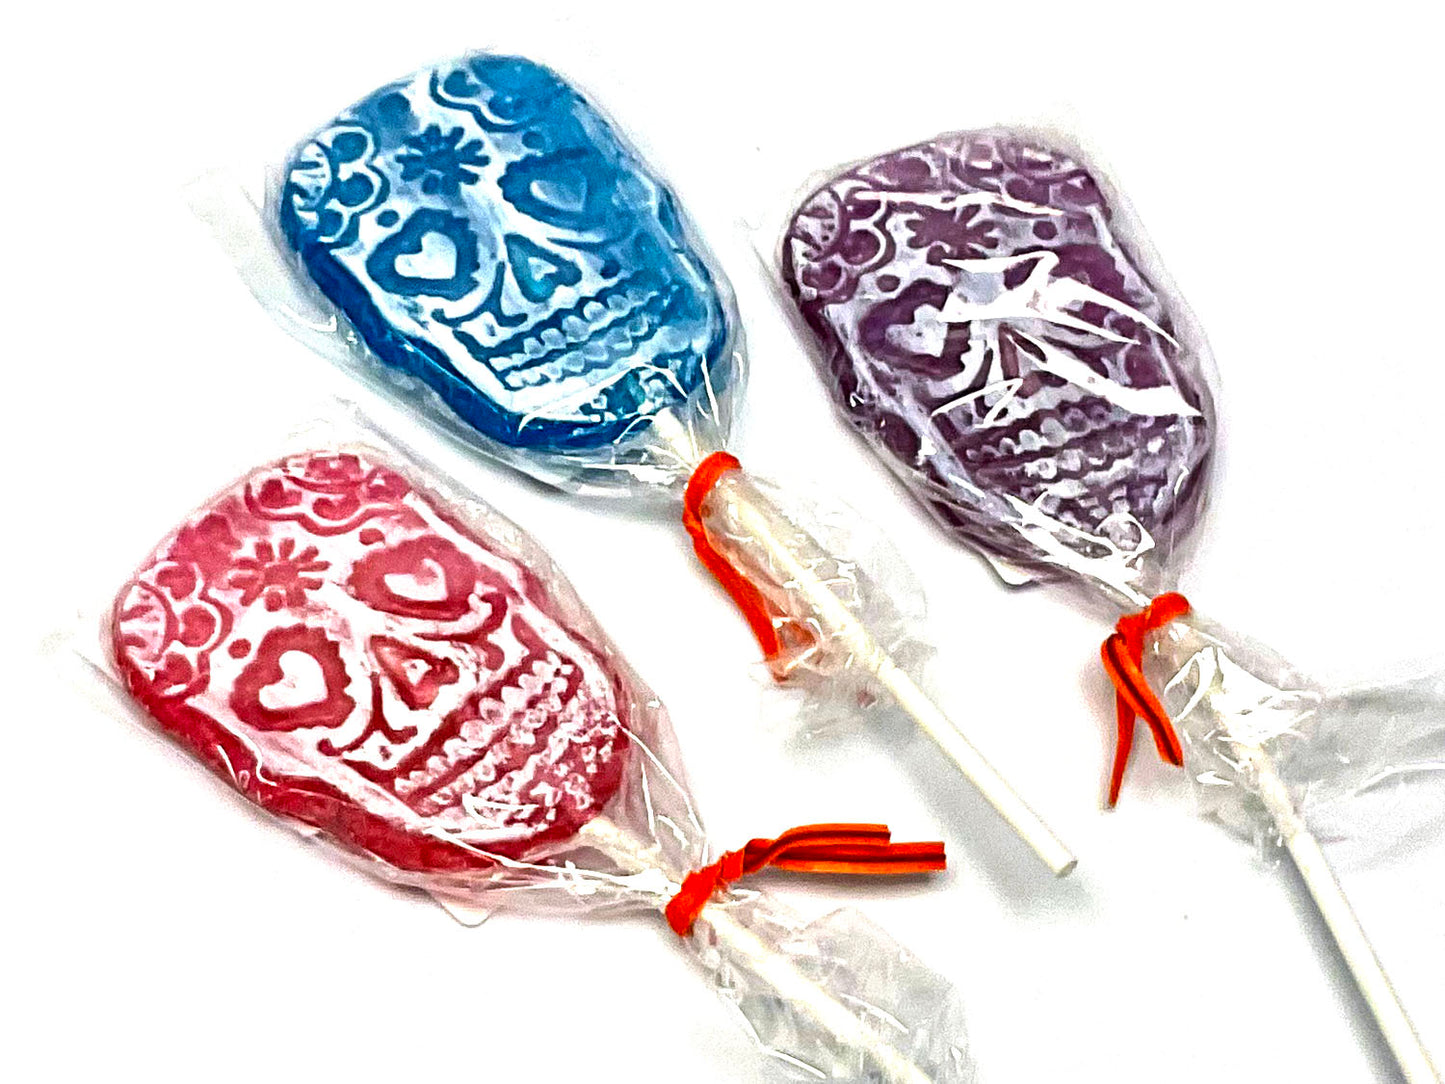 Frosted Sugar Skull Lollipop - 1 oz